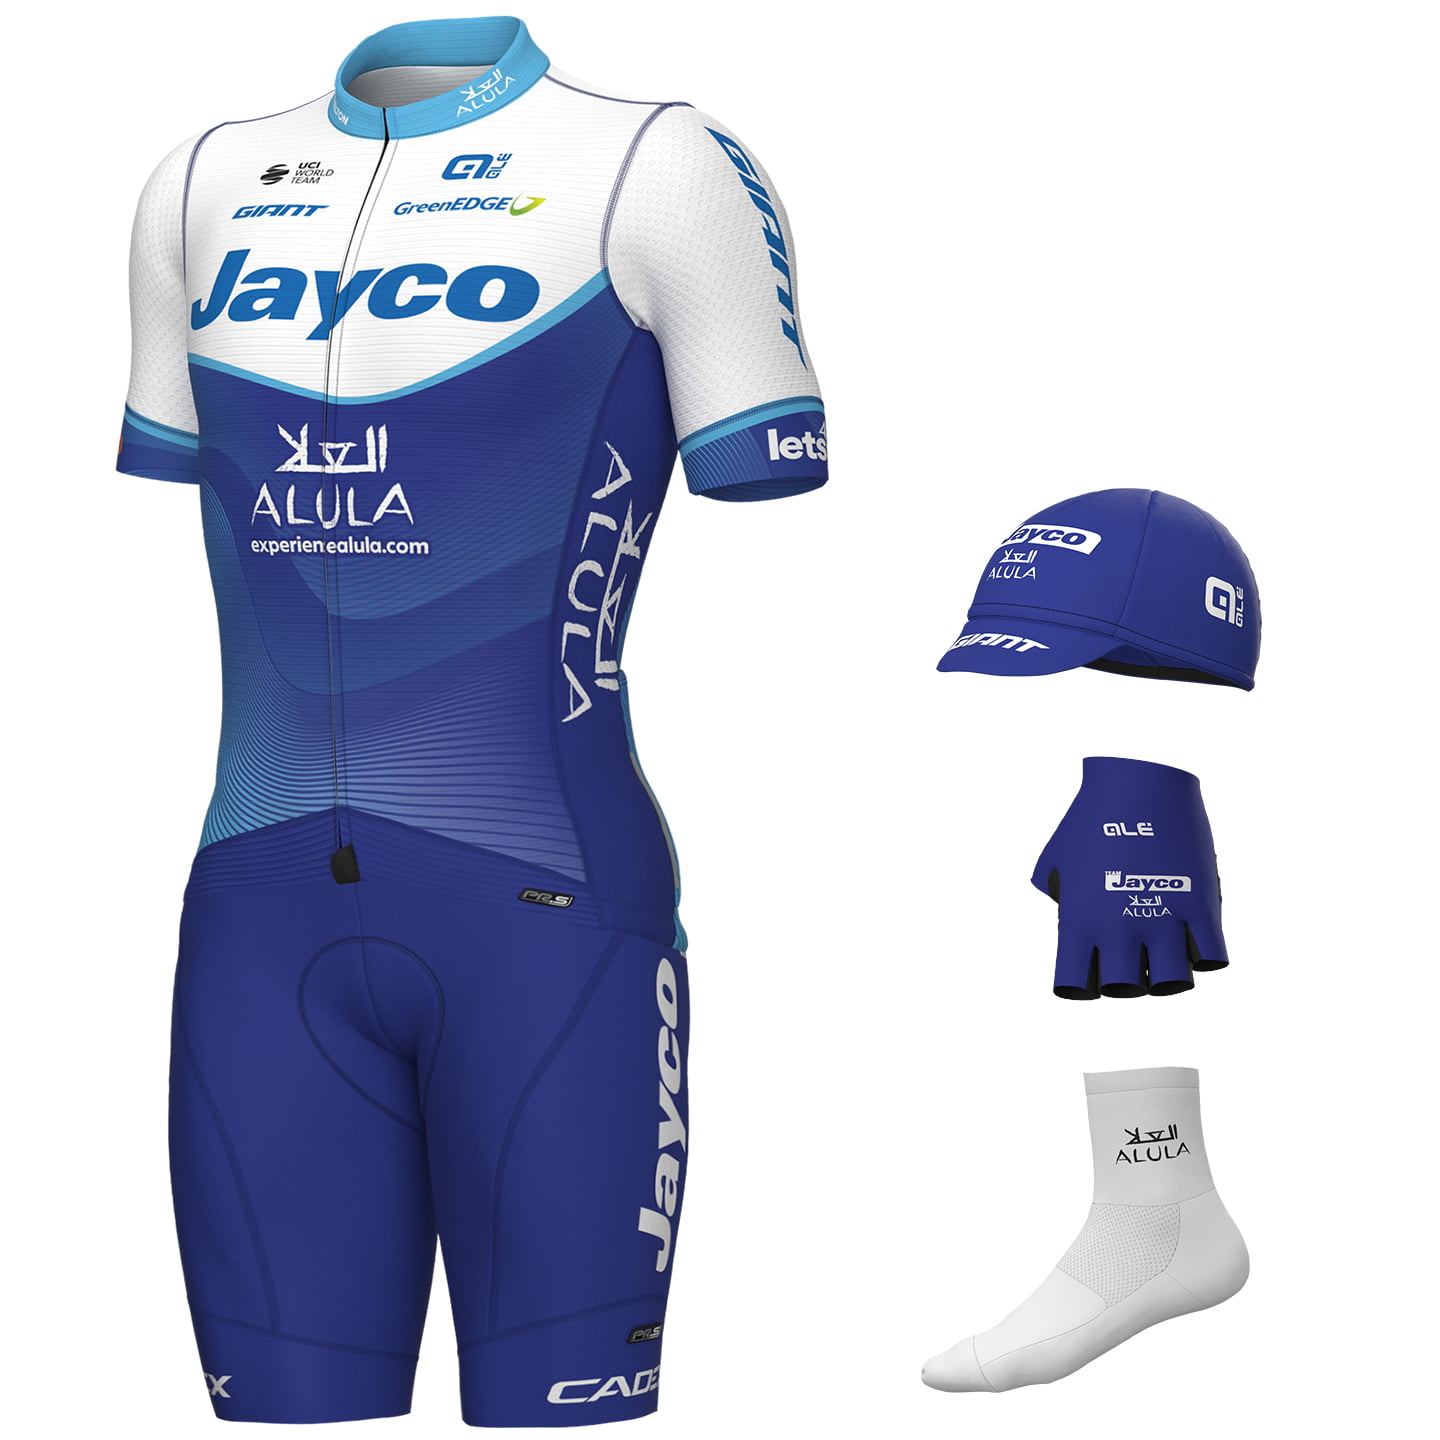 JAYCO-ALULA PR.S 2023 Maxi-Set (5 pieces) Maxi Set (5 pieces), for men, Cycling clothing